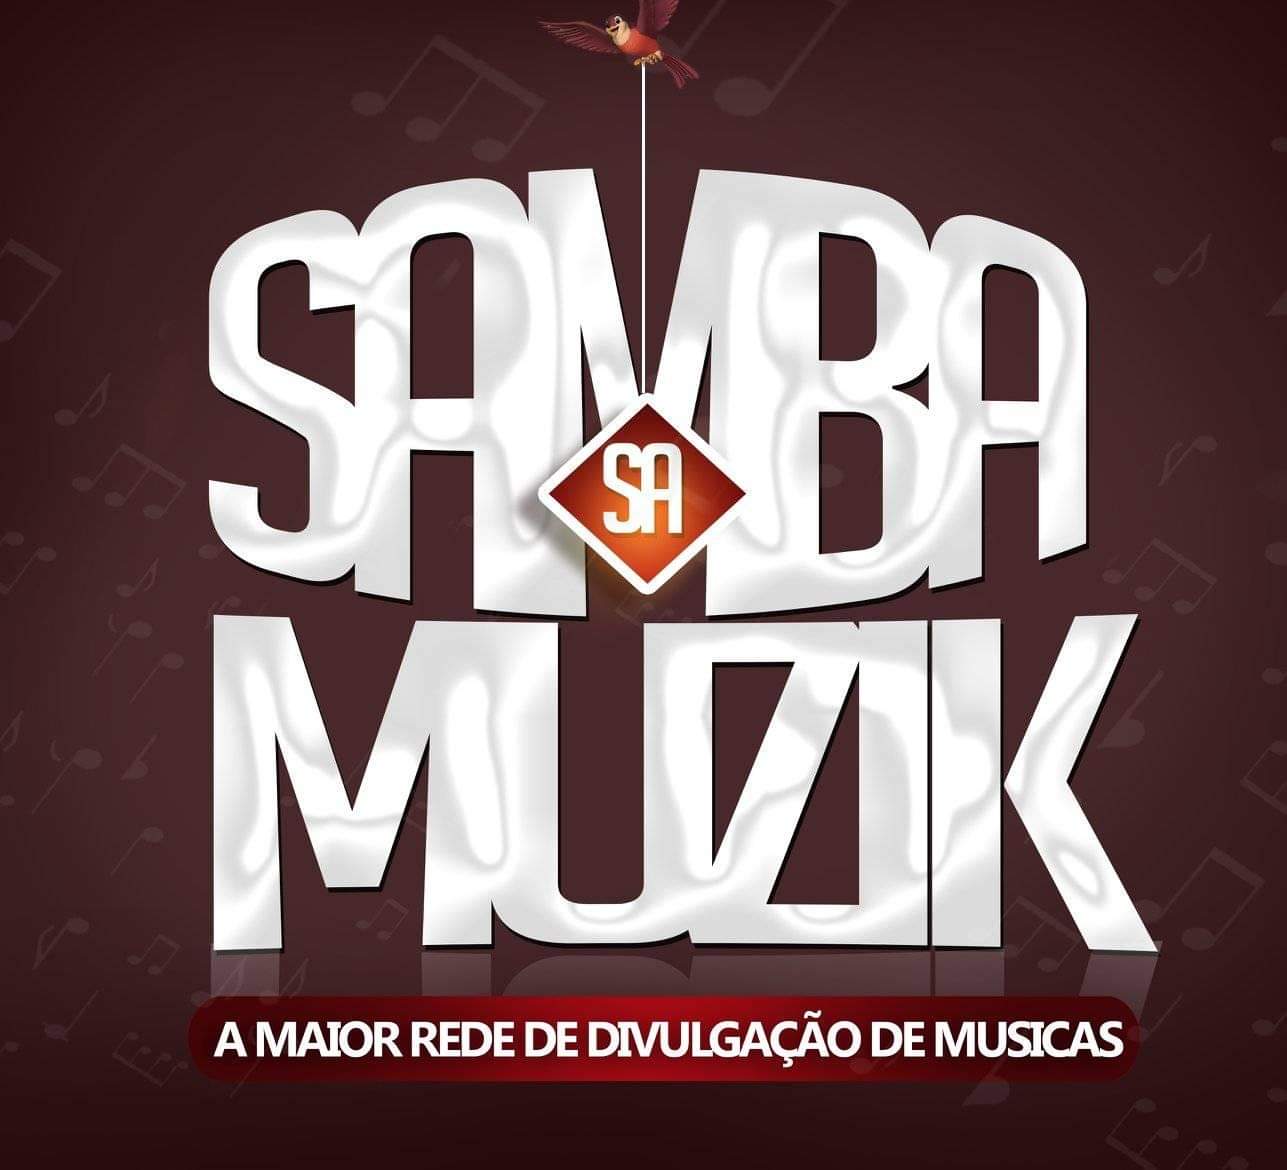 Afro House Sul Africano 2020 Download Mp3 Baixar Musica Baixar Musica De Samba Sa Muzik Musica Nova Kizomba Zouk Afro House Semba